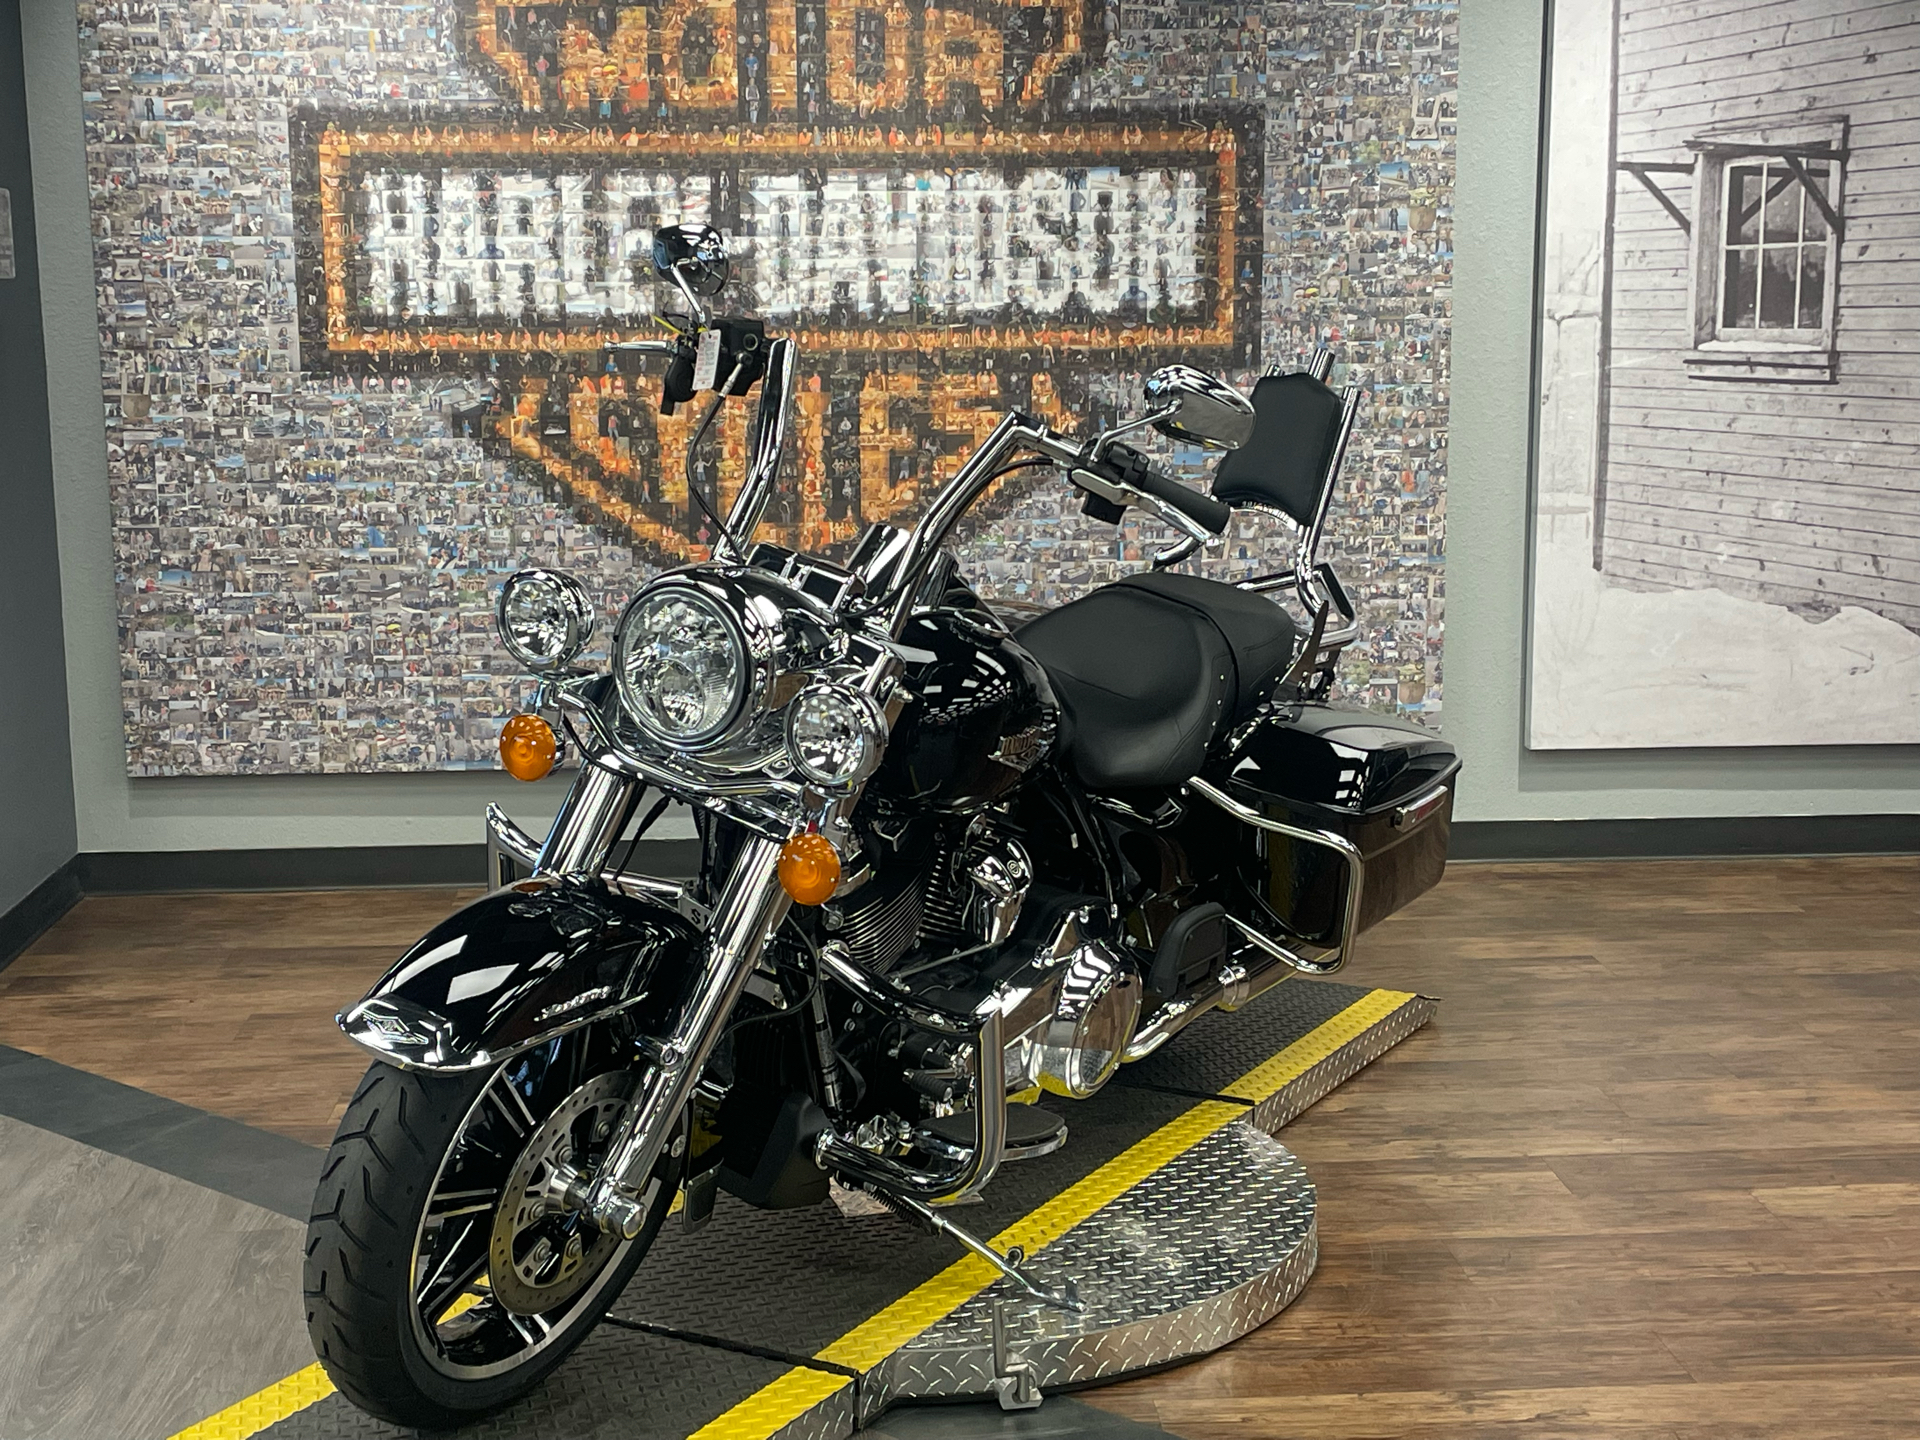 2022 Harley-Davidson Road King® in Greeley, Colorado - Photo 3